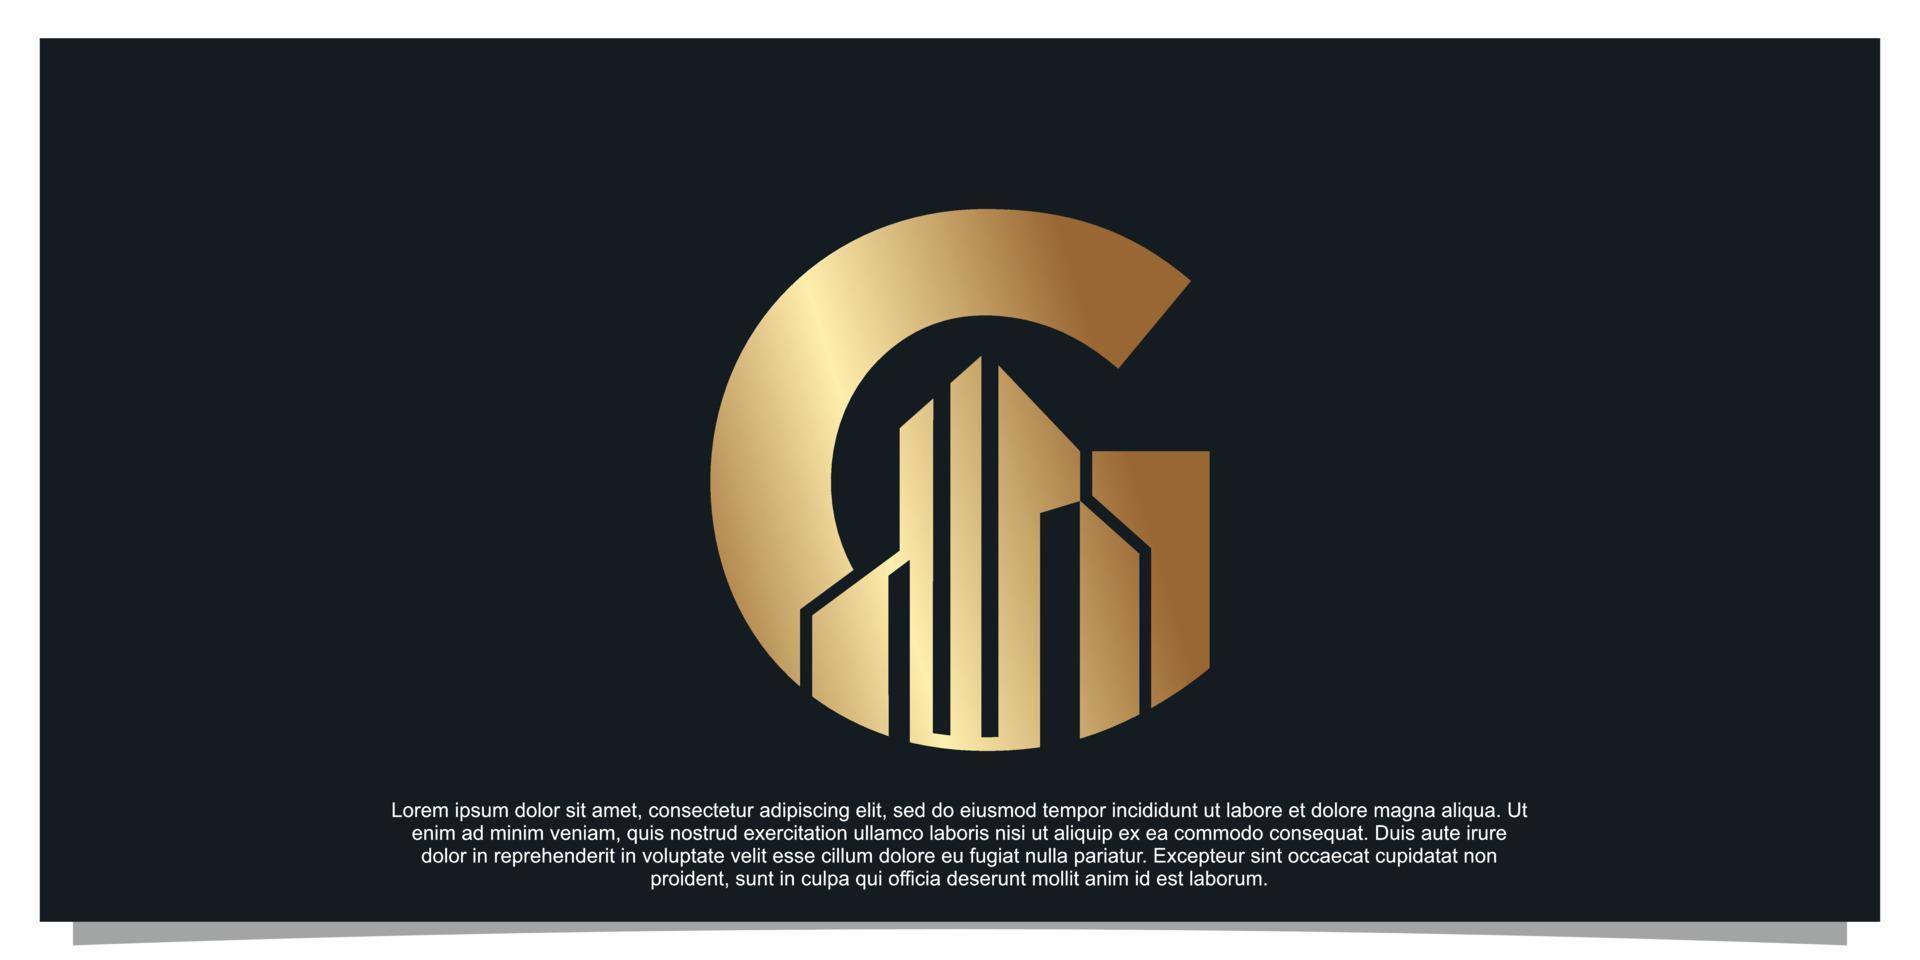 Monogram logo design initial letter G for business with building golden color concept Premium Vector